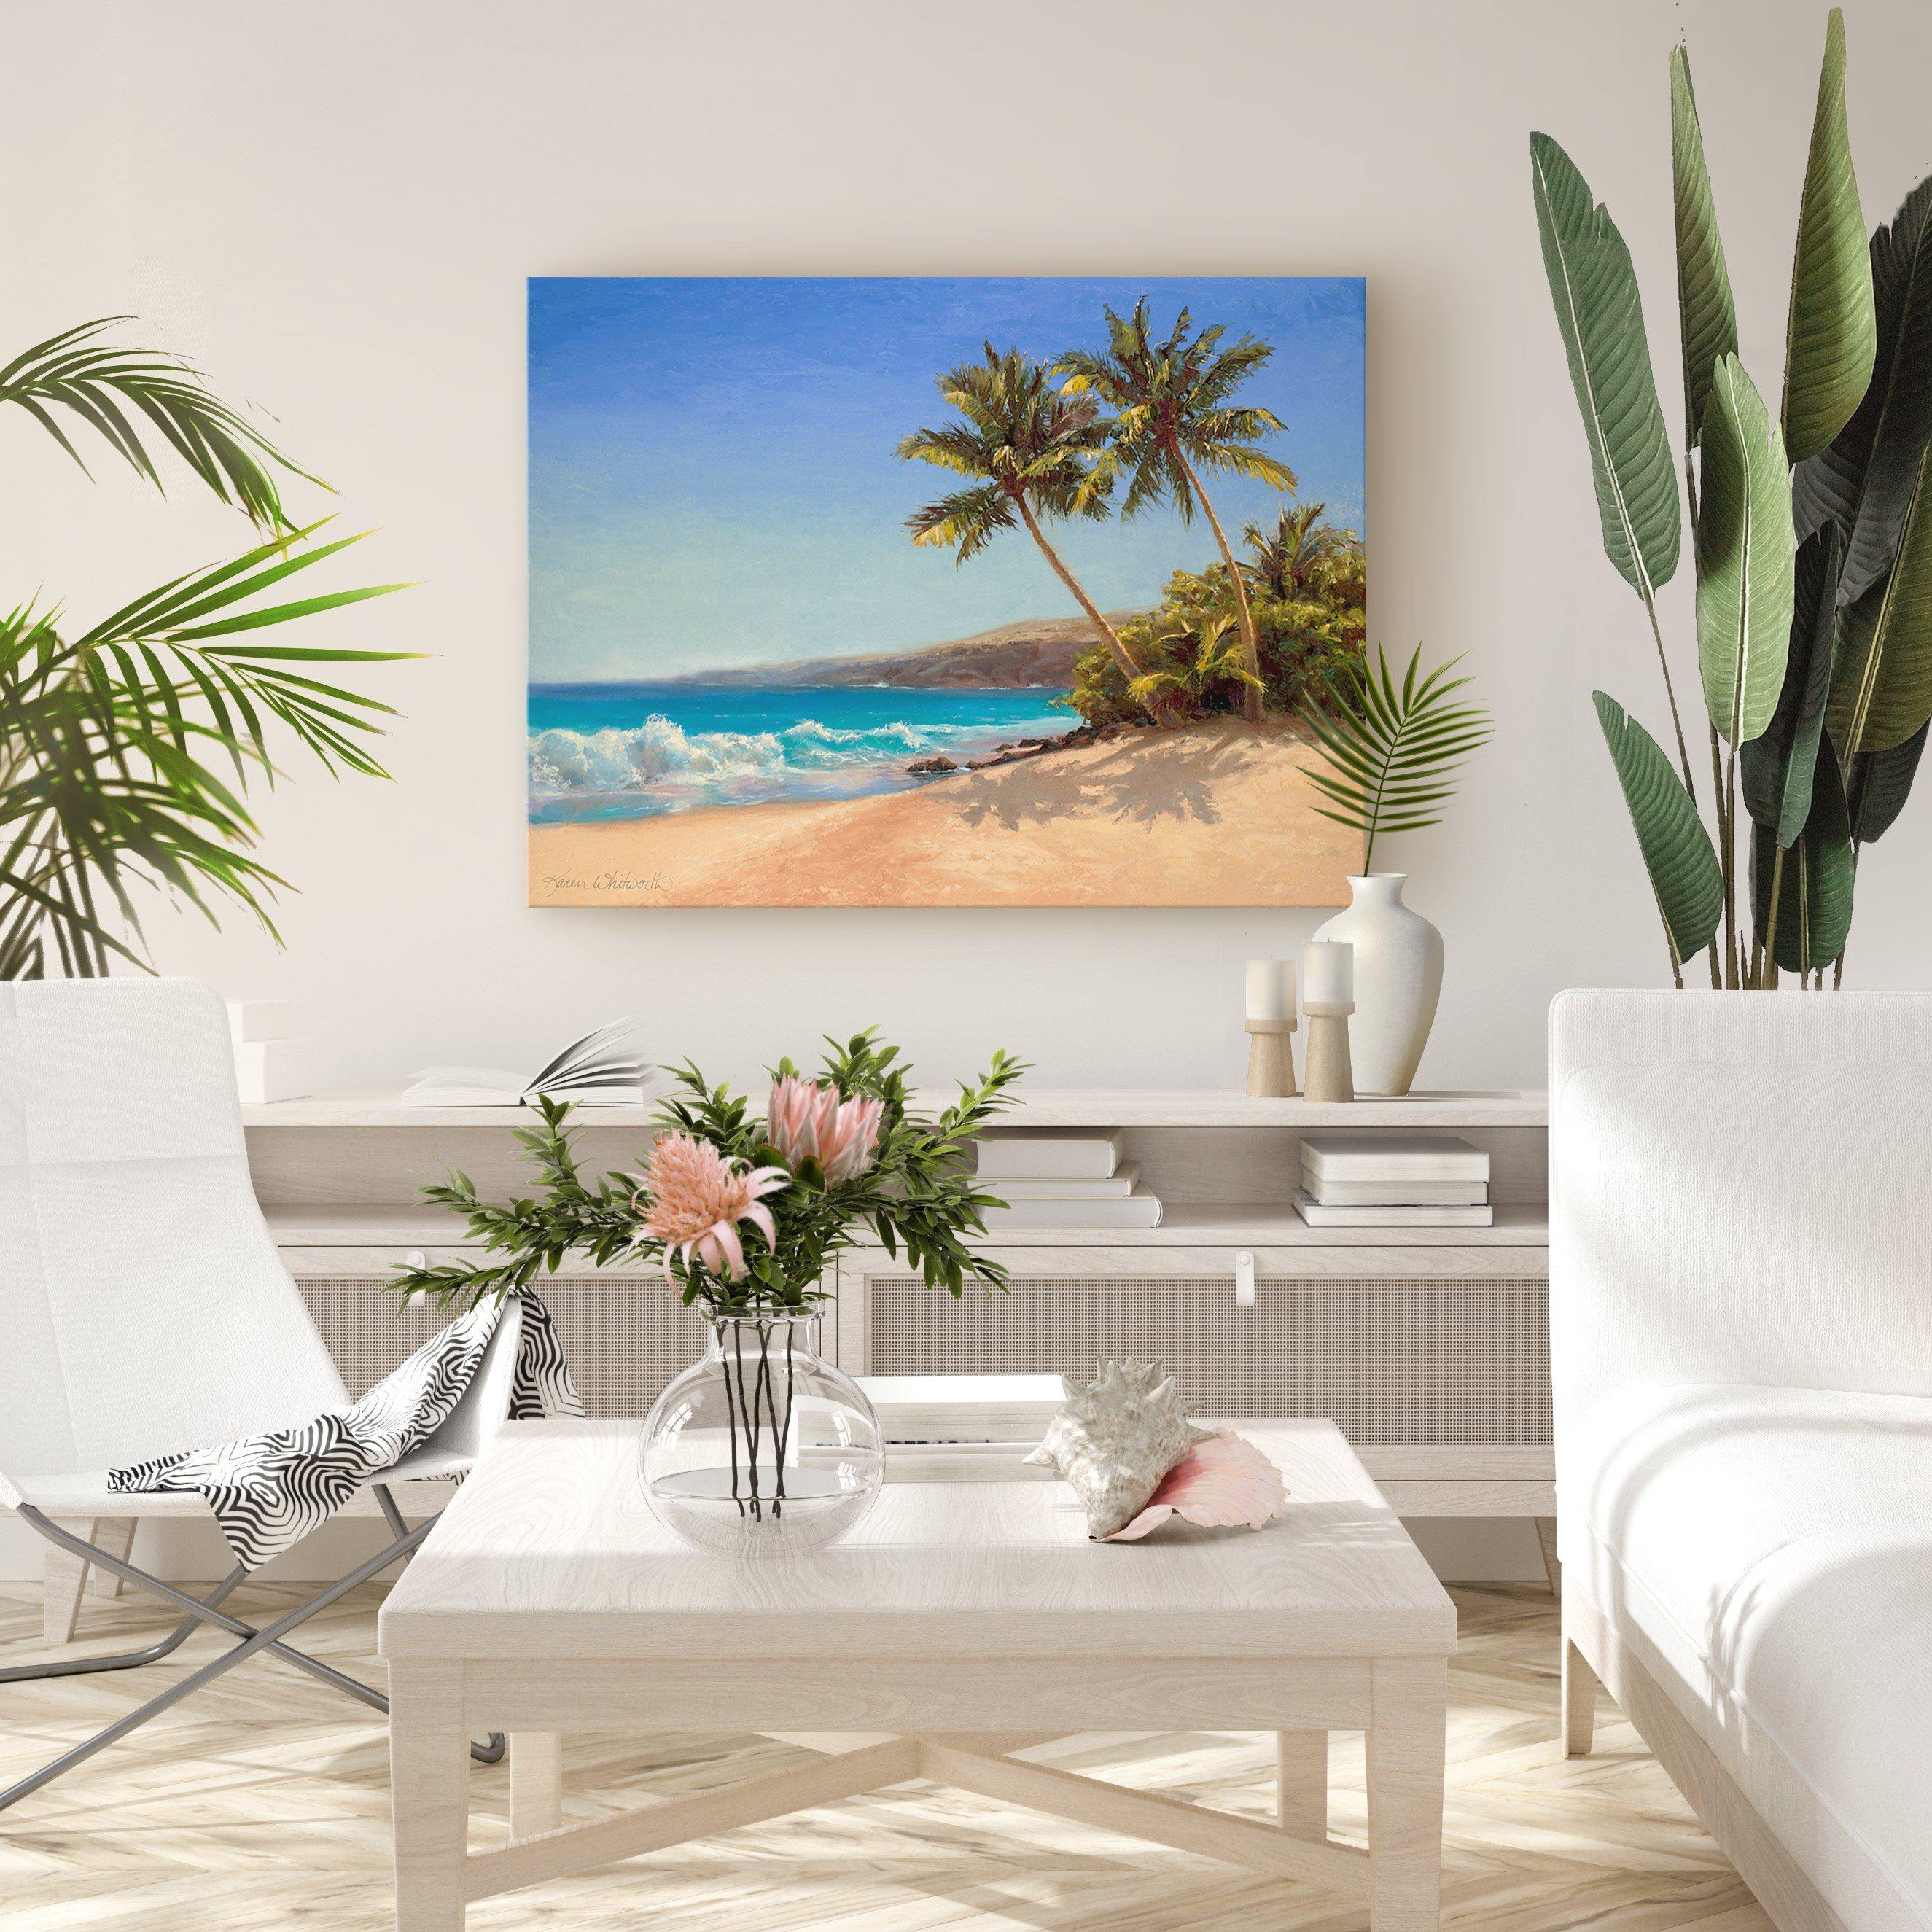 Palm Trees and Beach Vibes - Tropical Decor Beach House Inspiration